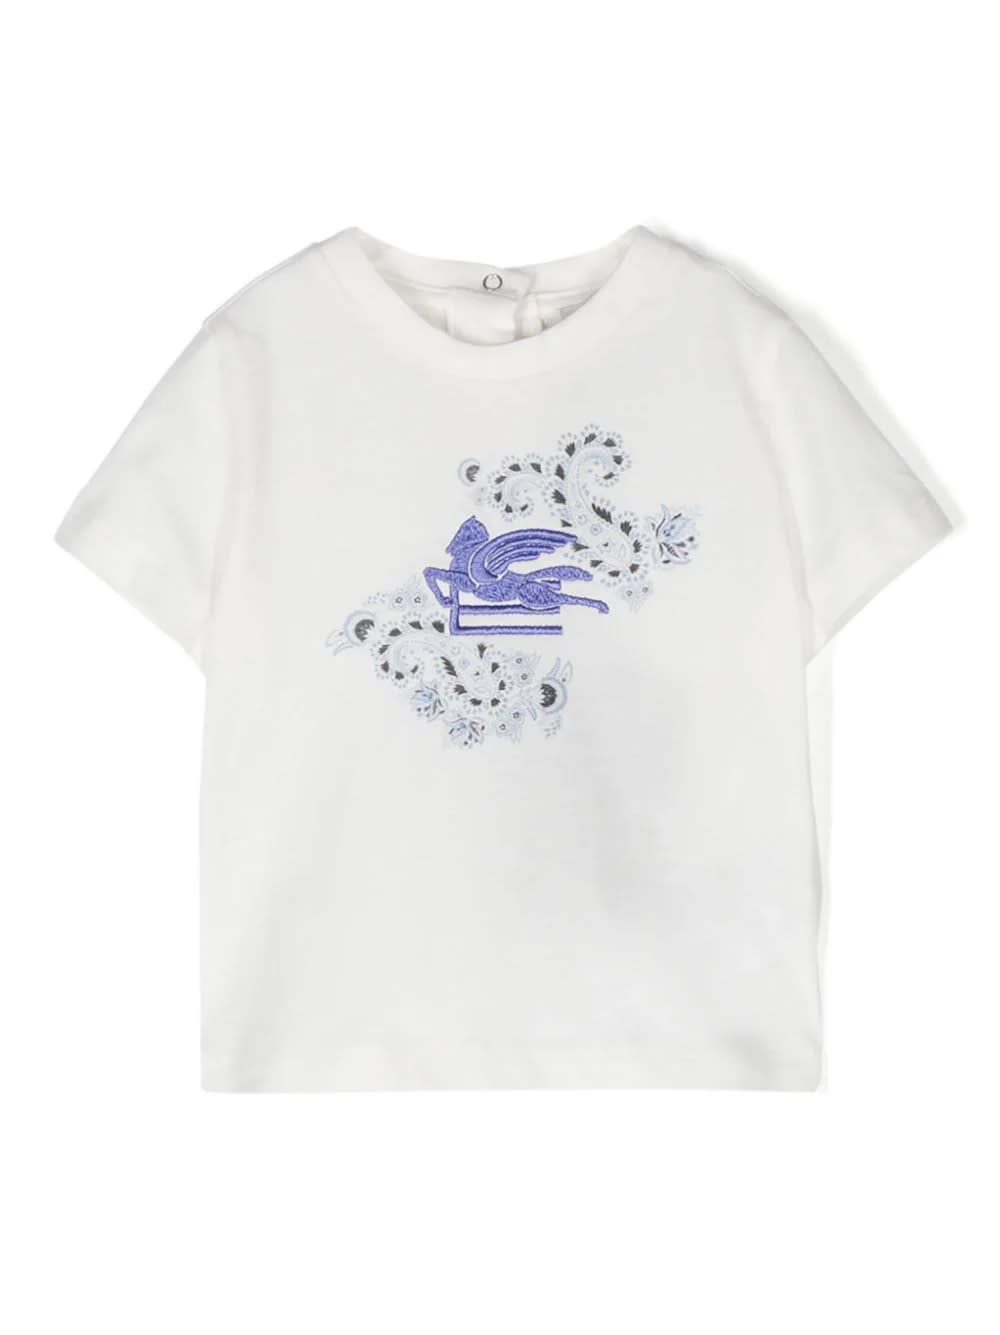 Etro Babies' White T-shirt With Light Blue Pegasus Motif